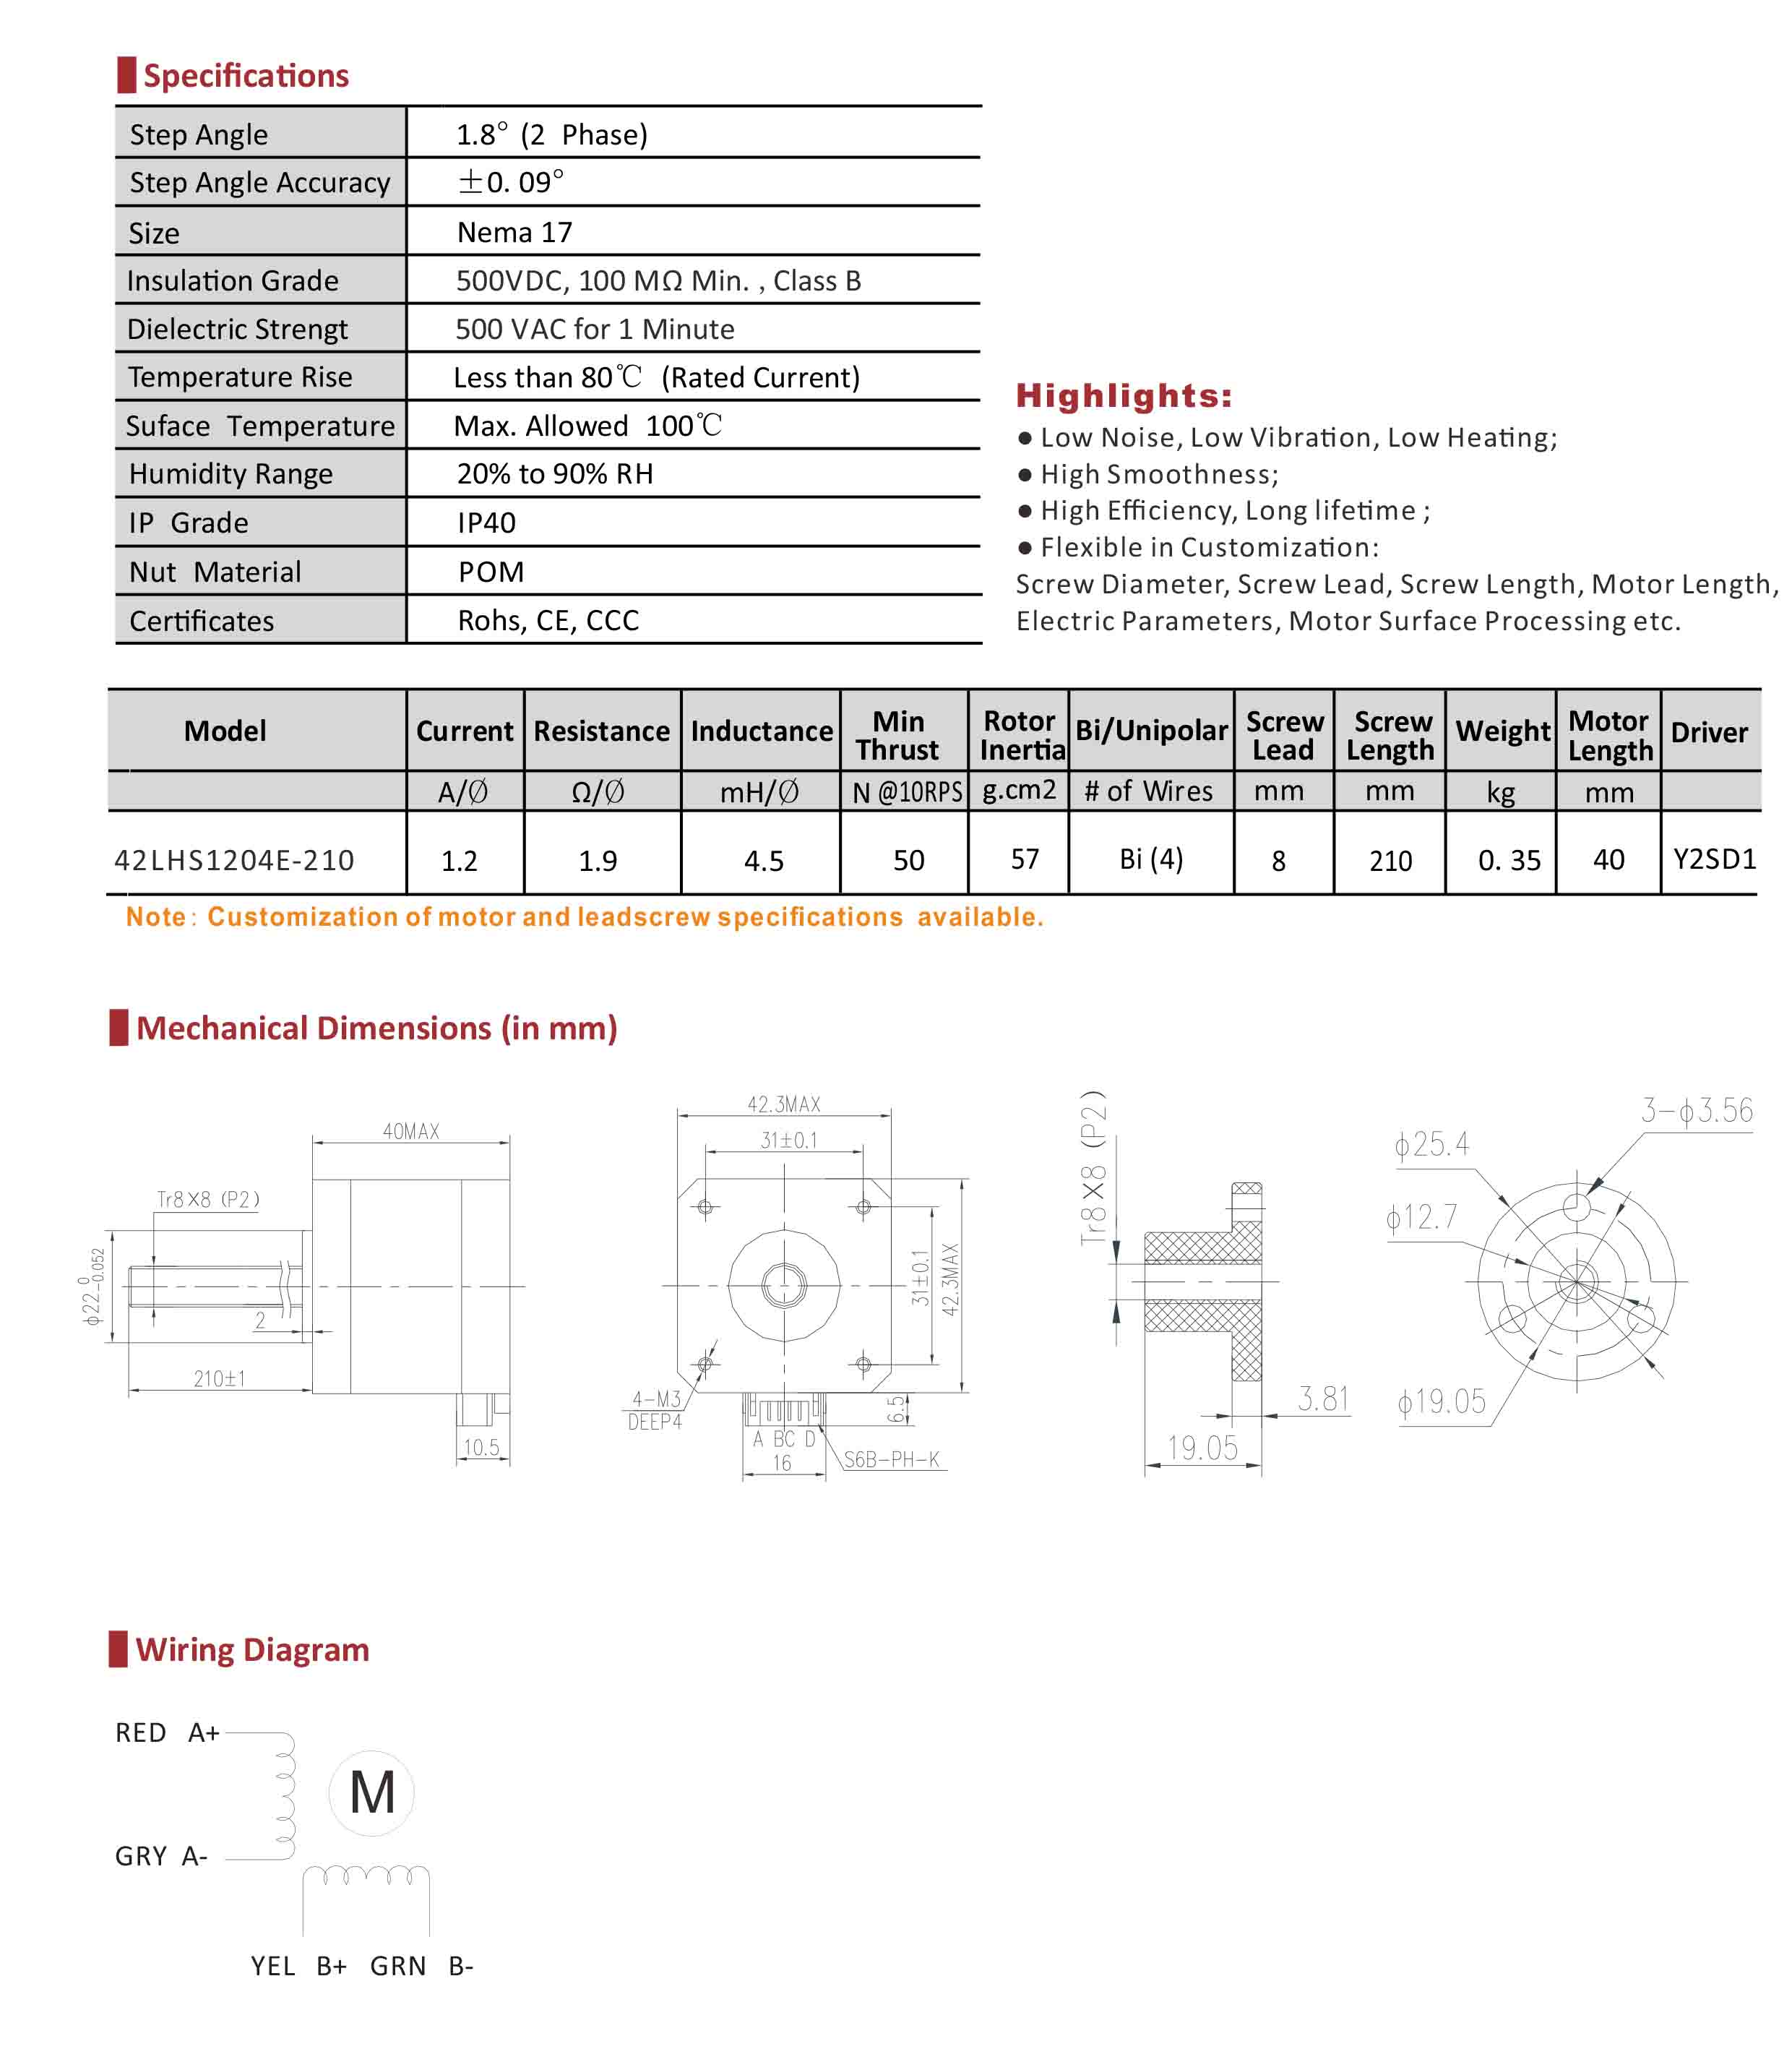 42LHS1204E-210 External Nut Hybrid Linear Stepper Motor Data Sheet.jpg